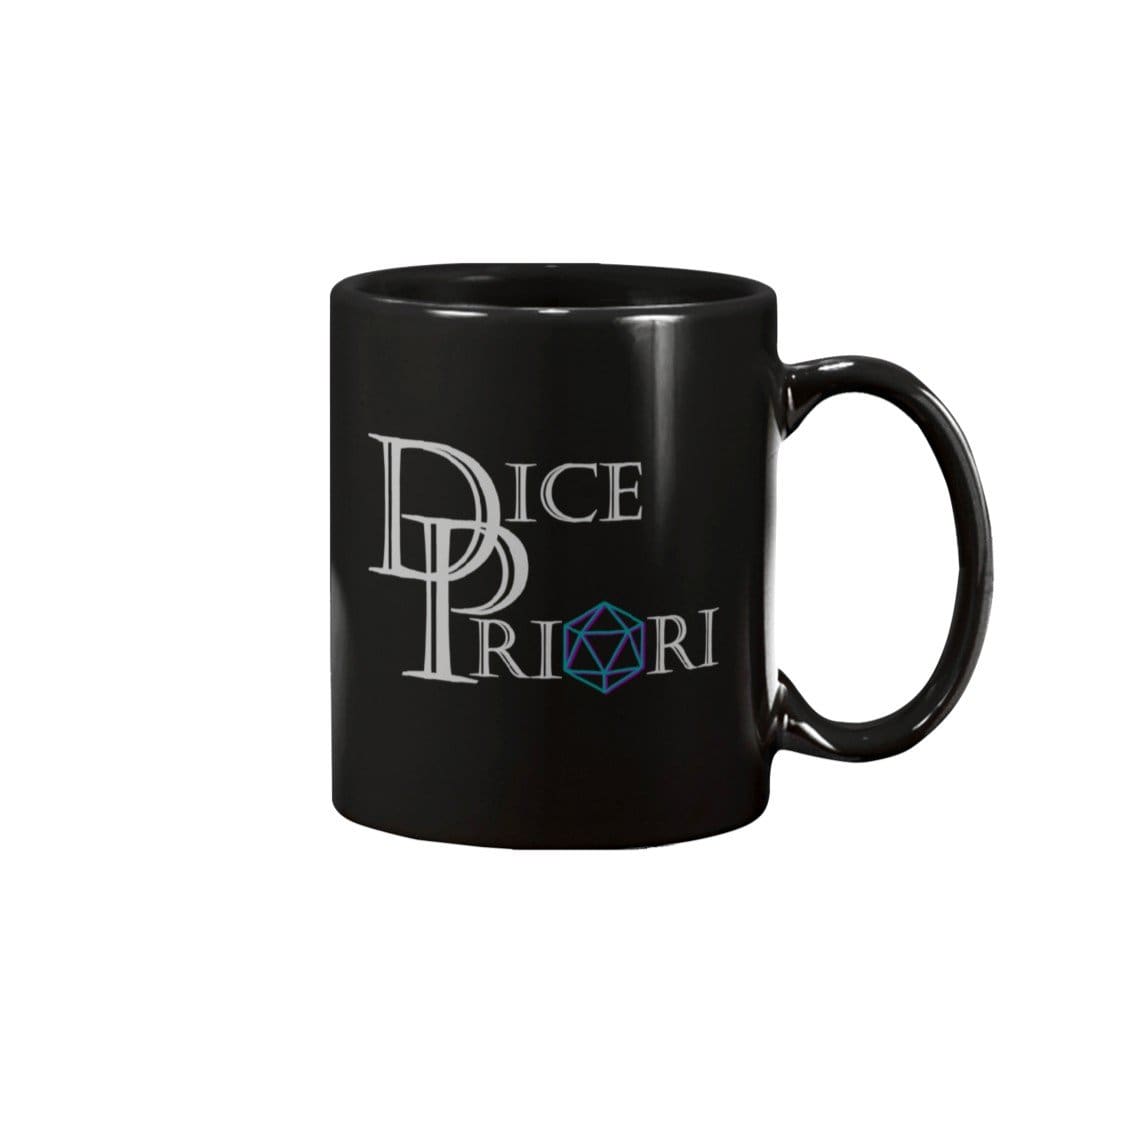 Dice Priori Classic Text Logo 15oz Coffee Mug - Black / 15OZ - Dice Priori